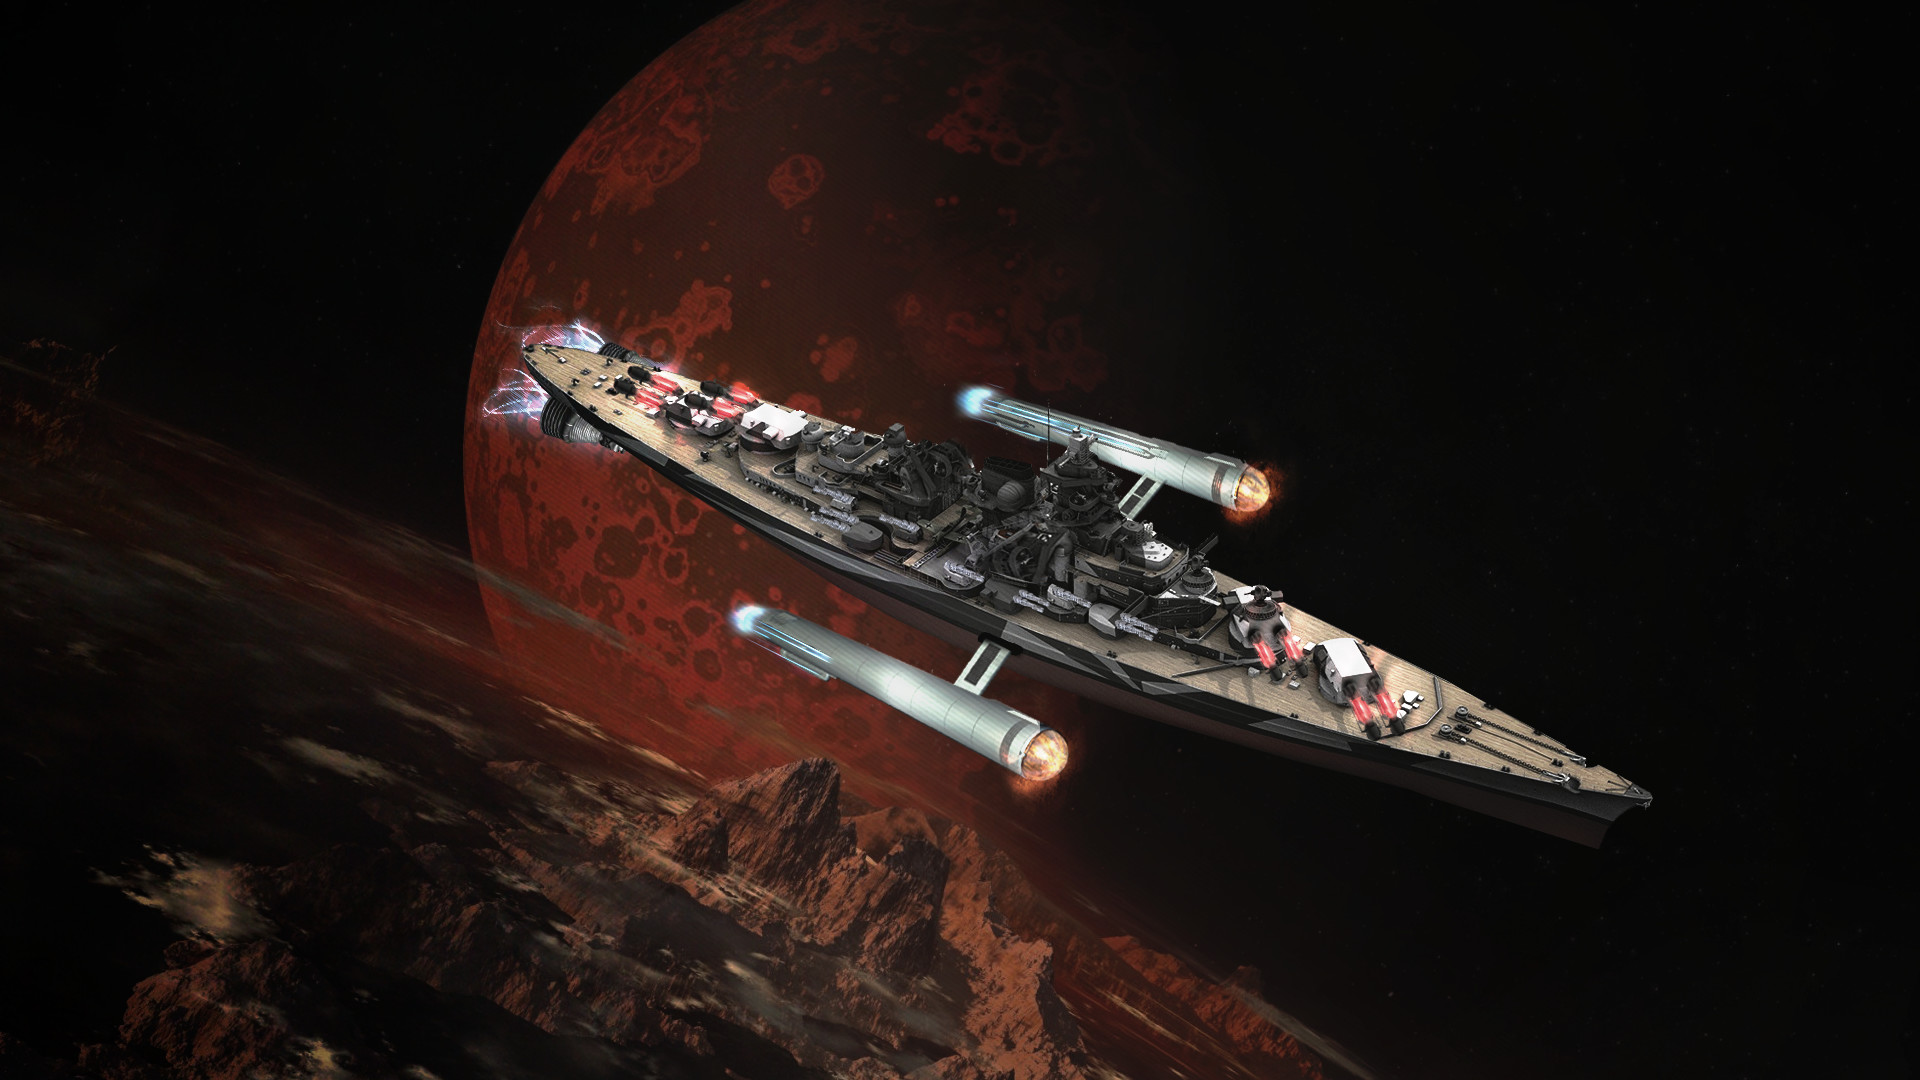 ArtStation - large space battleship